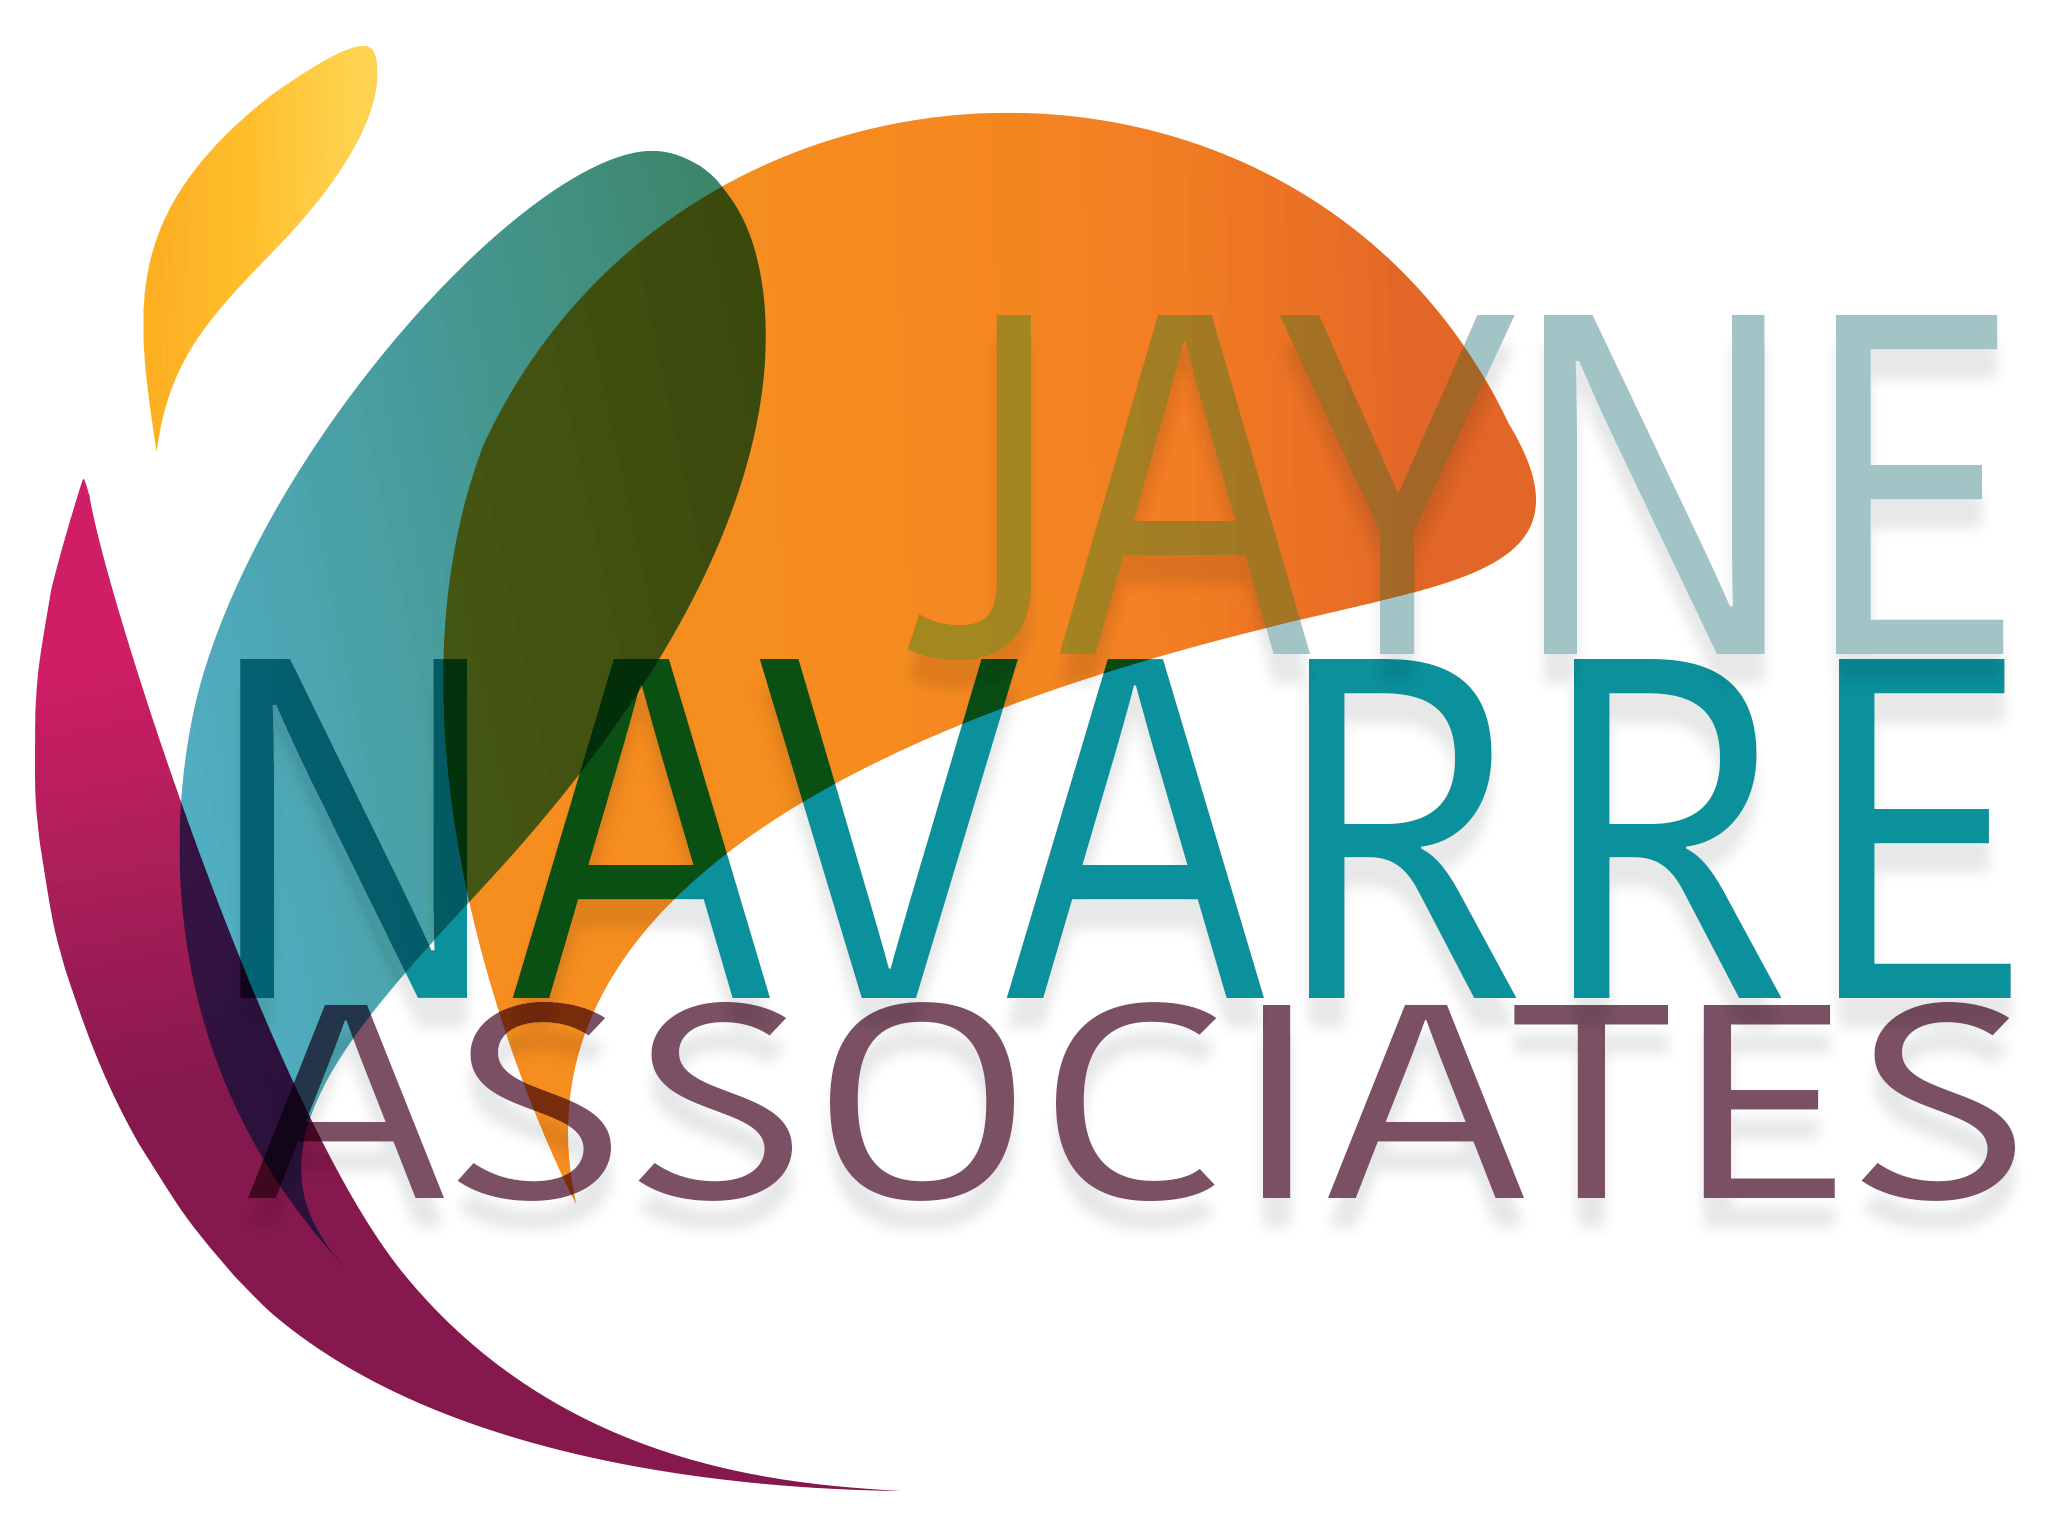 Navarre Logo - Portfolio - Jayne Navarre Associates